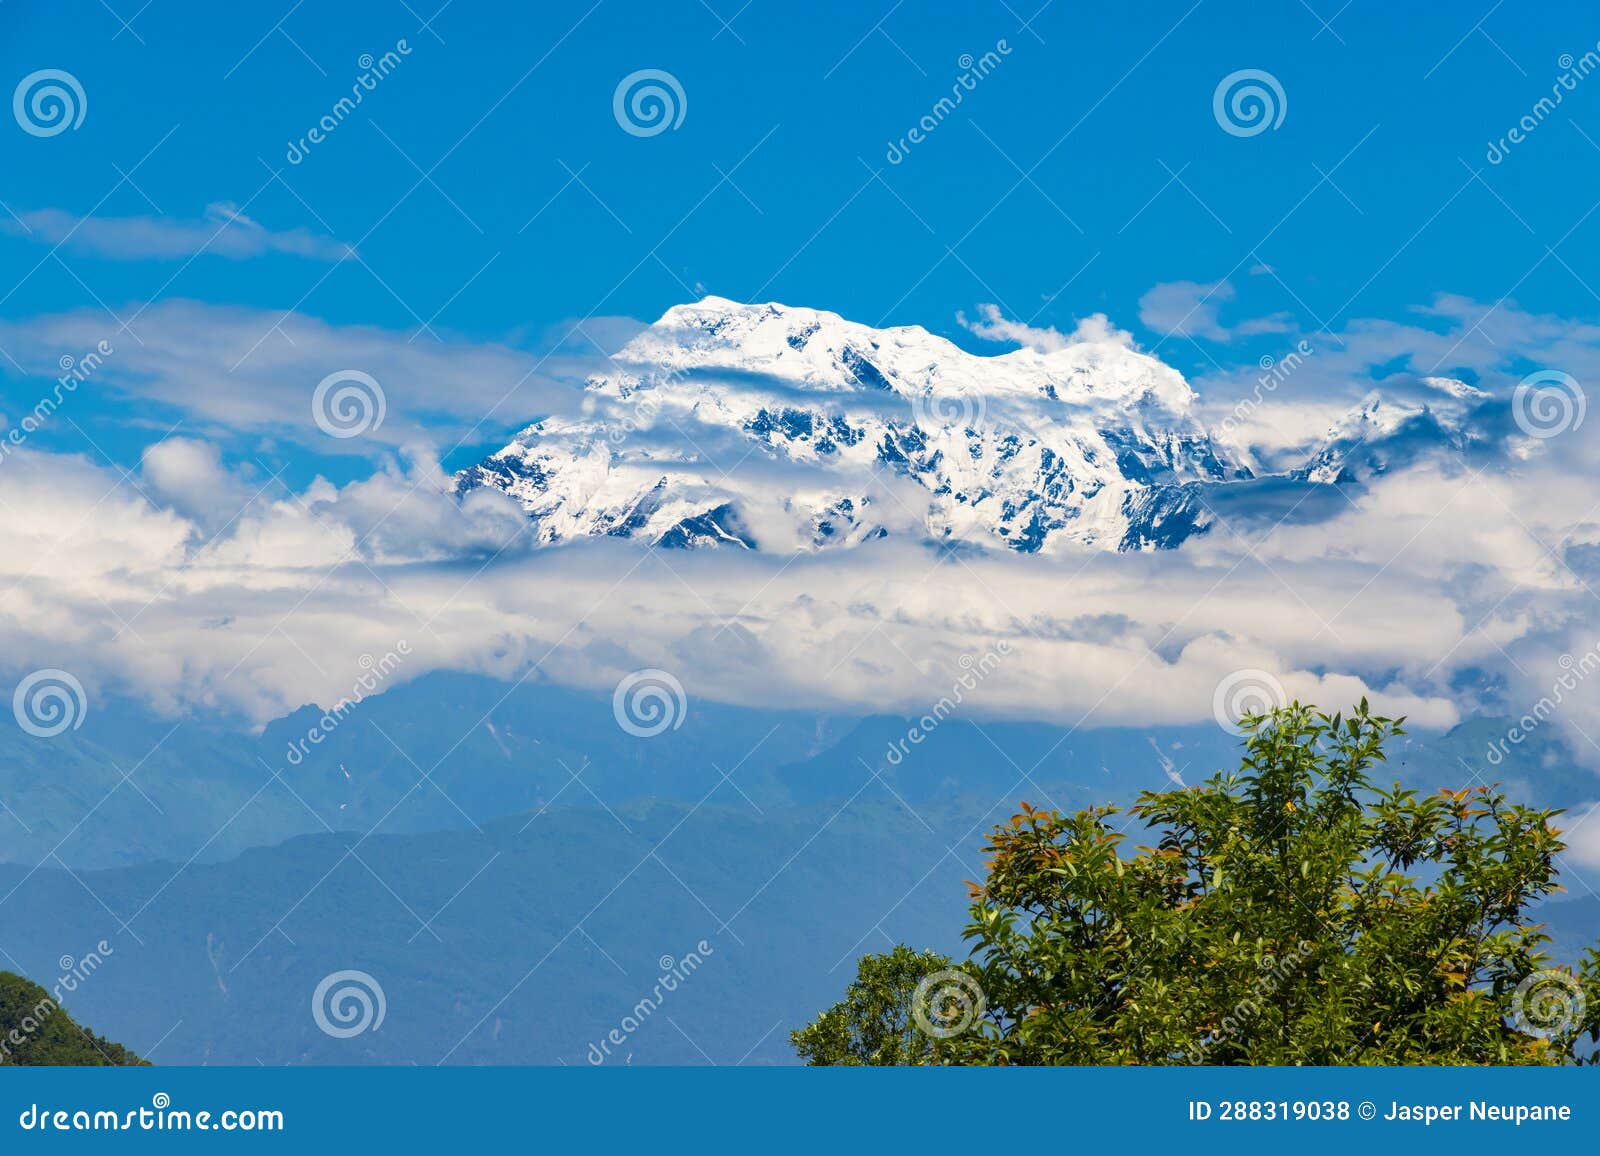 annapurna mountain seen from sarangkot, pokhara during trekking to base camp in himalayas of nepal